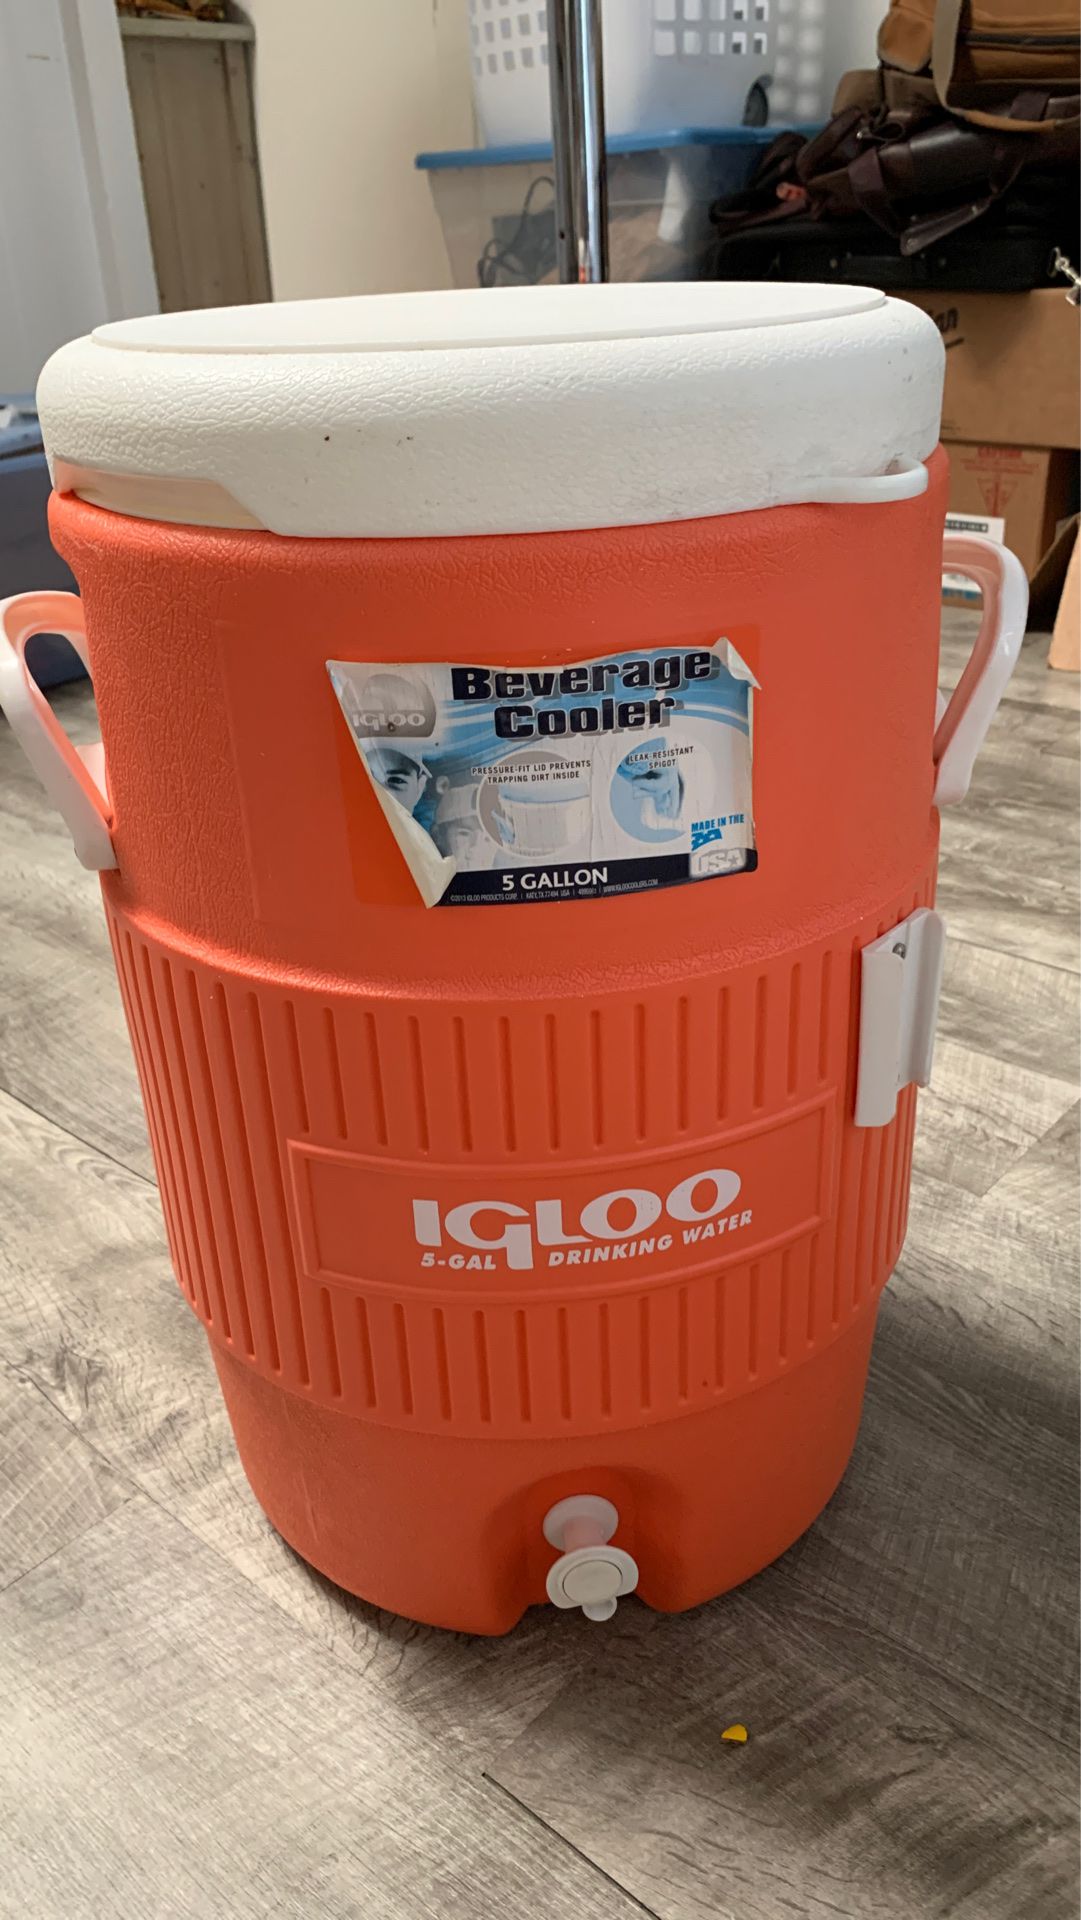 5 gallon igloo cooler